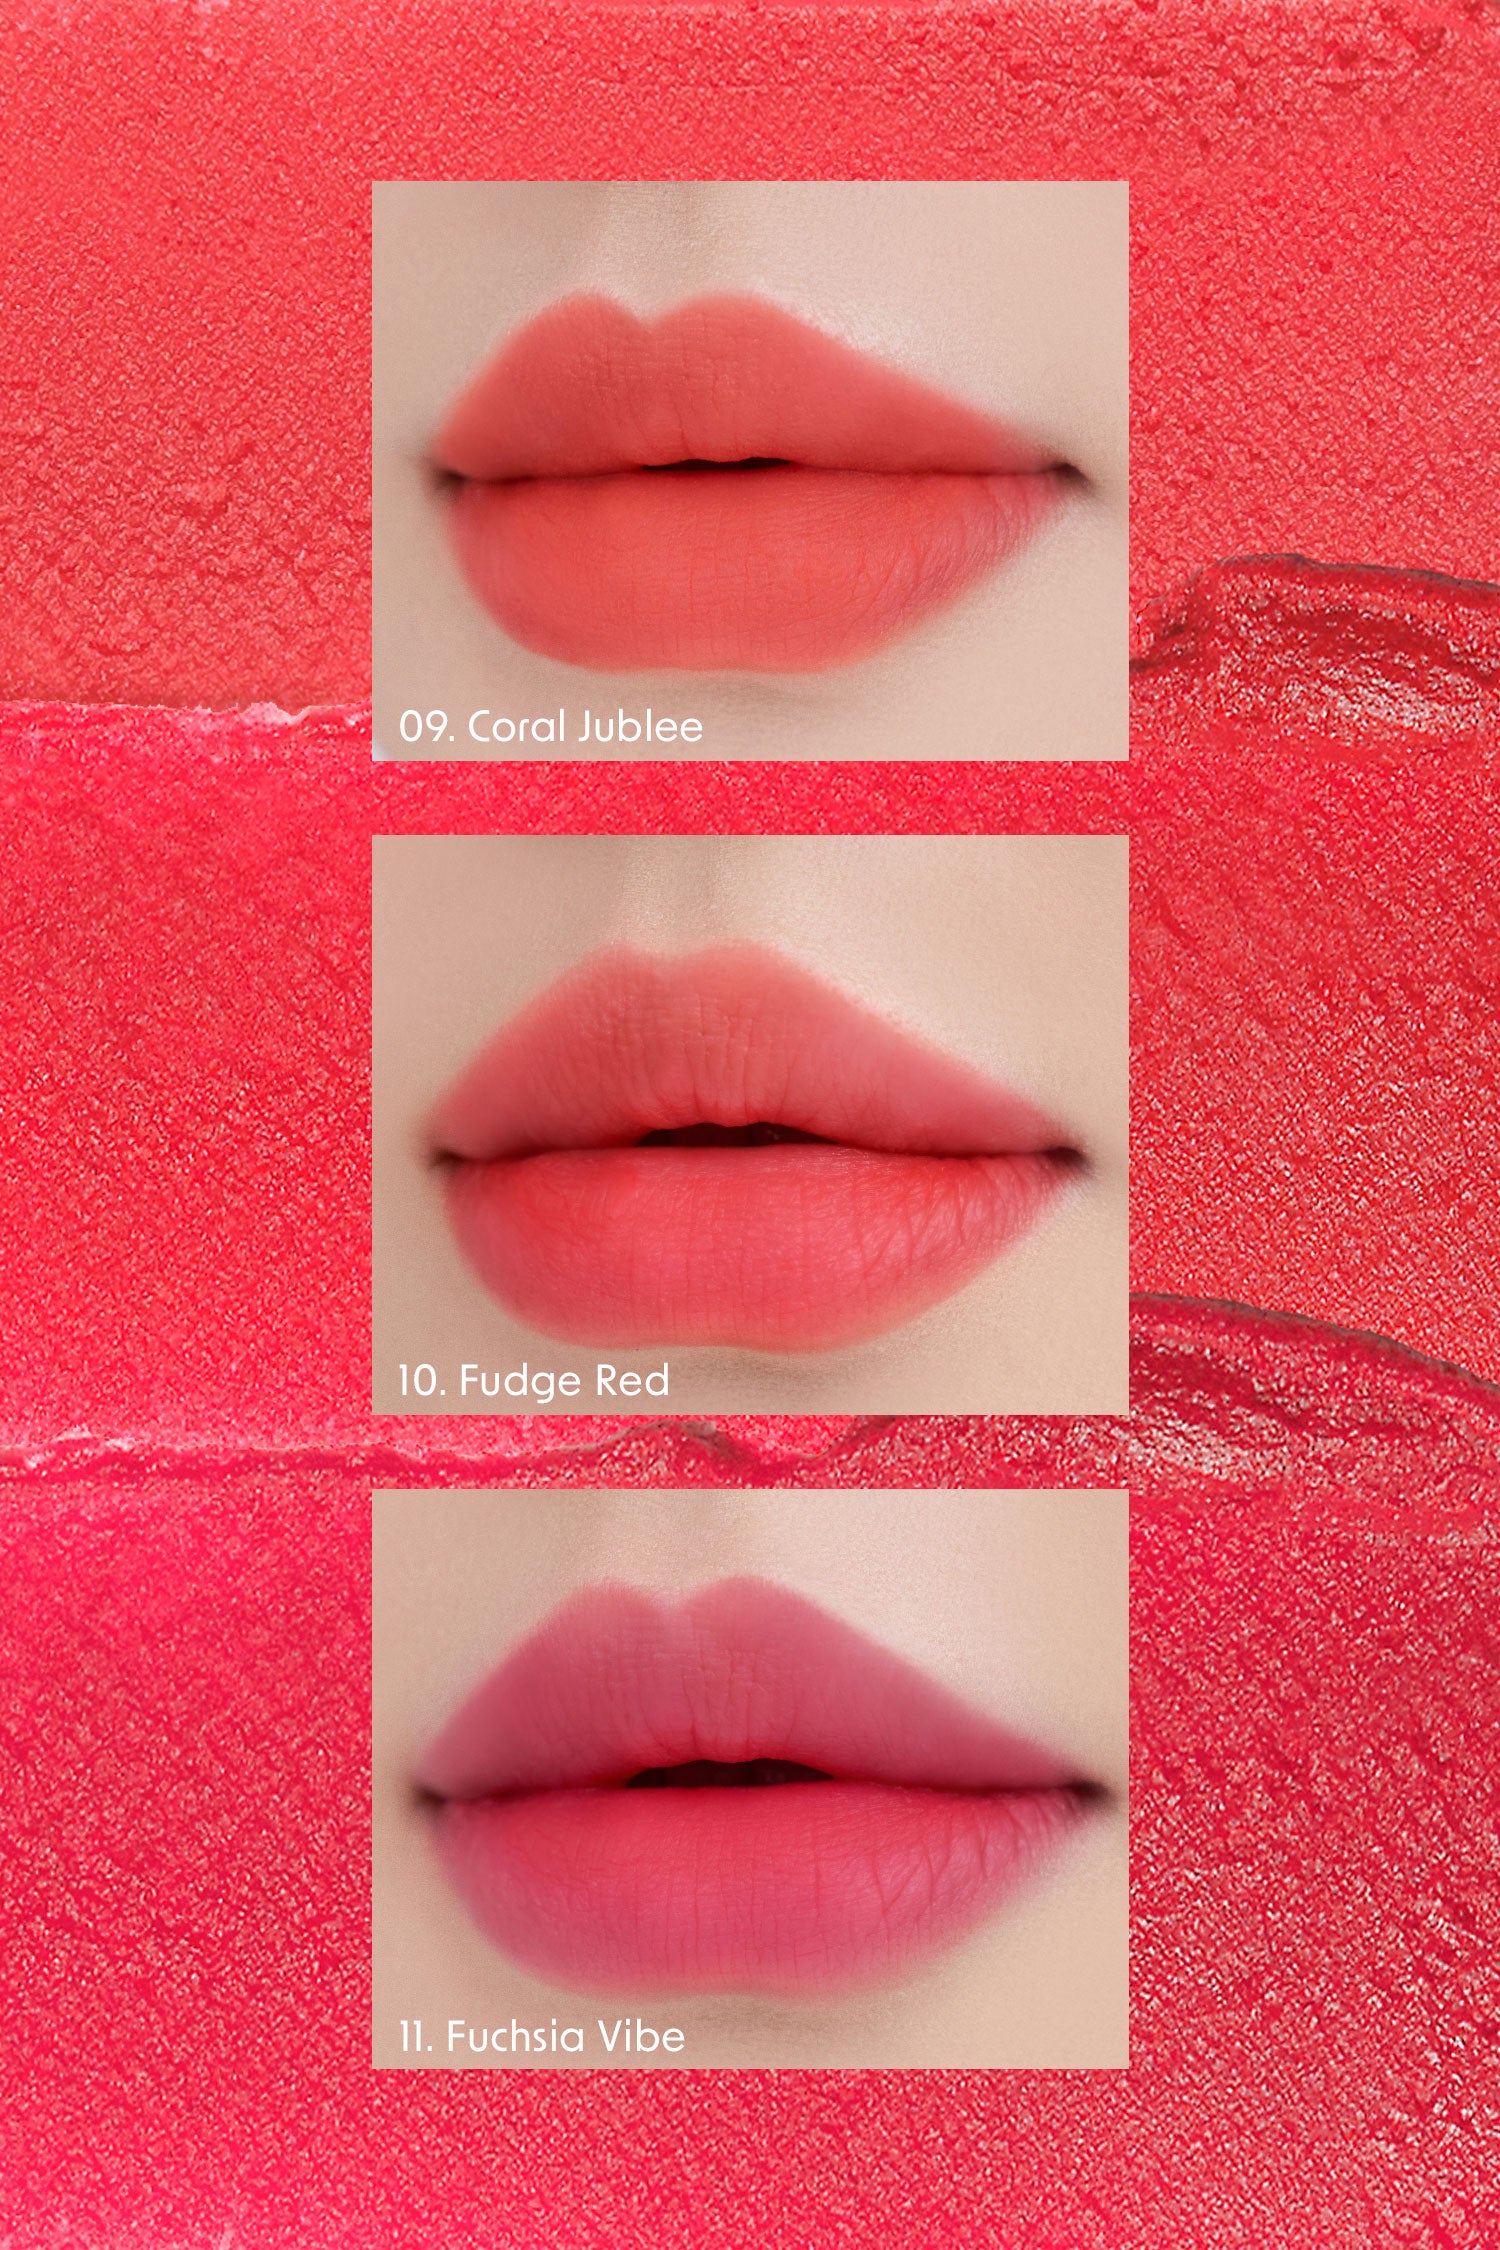 Rom&nd Blur Fudge Tint Color 01 Pomeloco